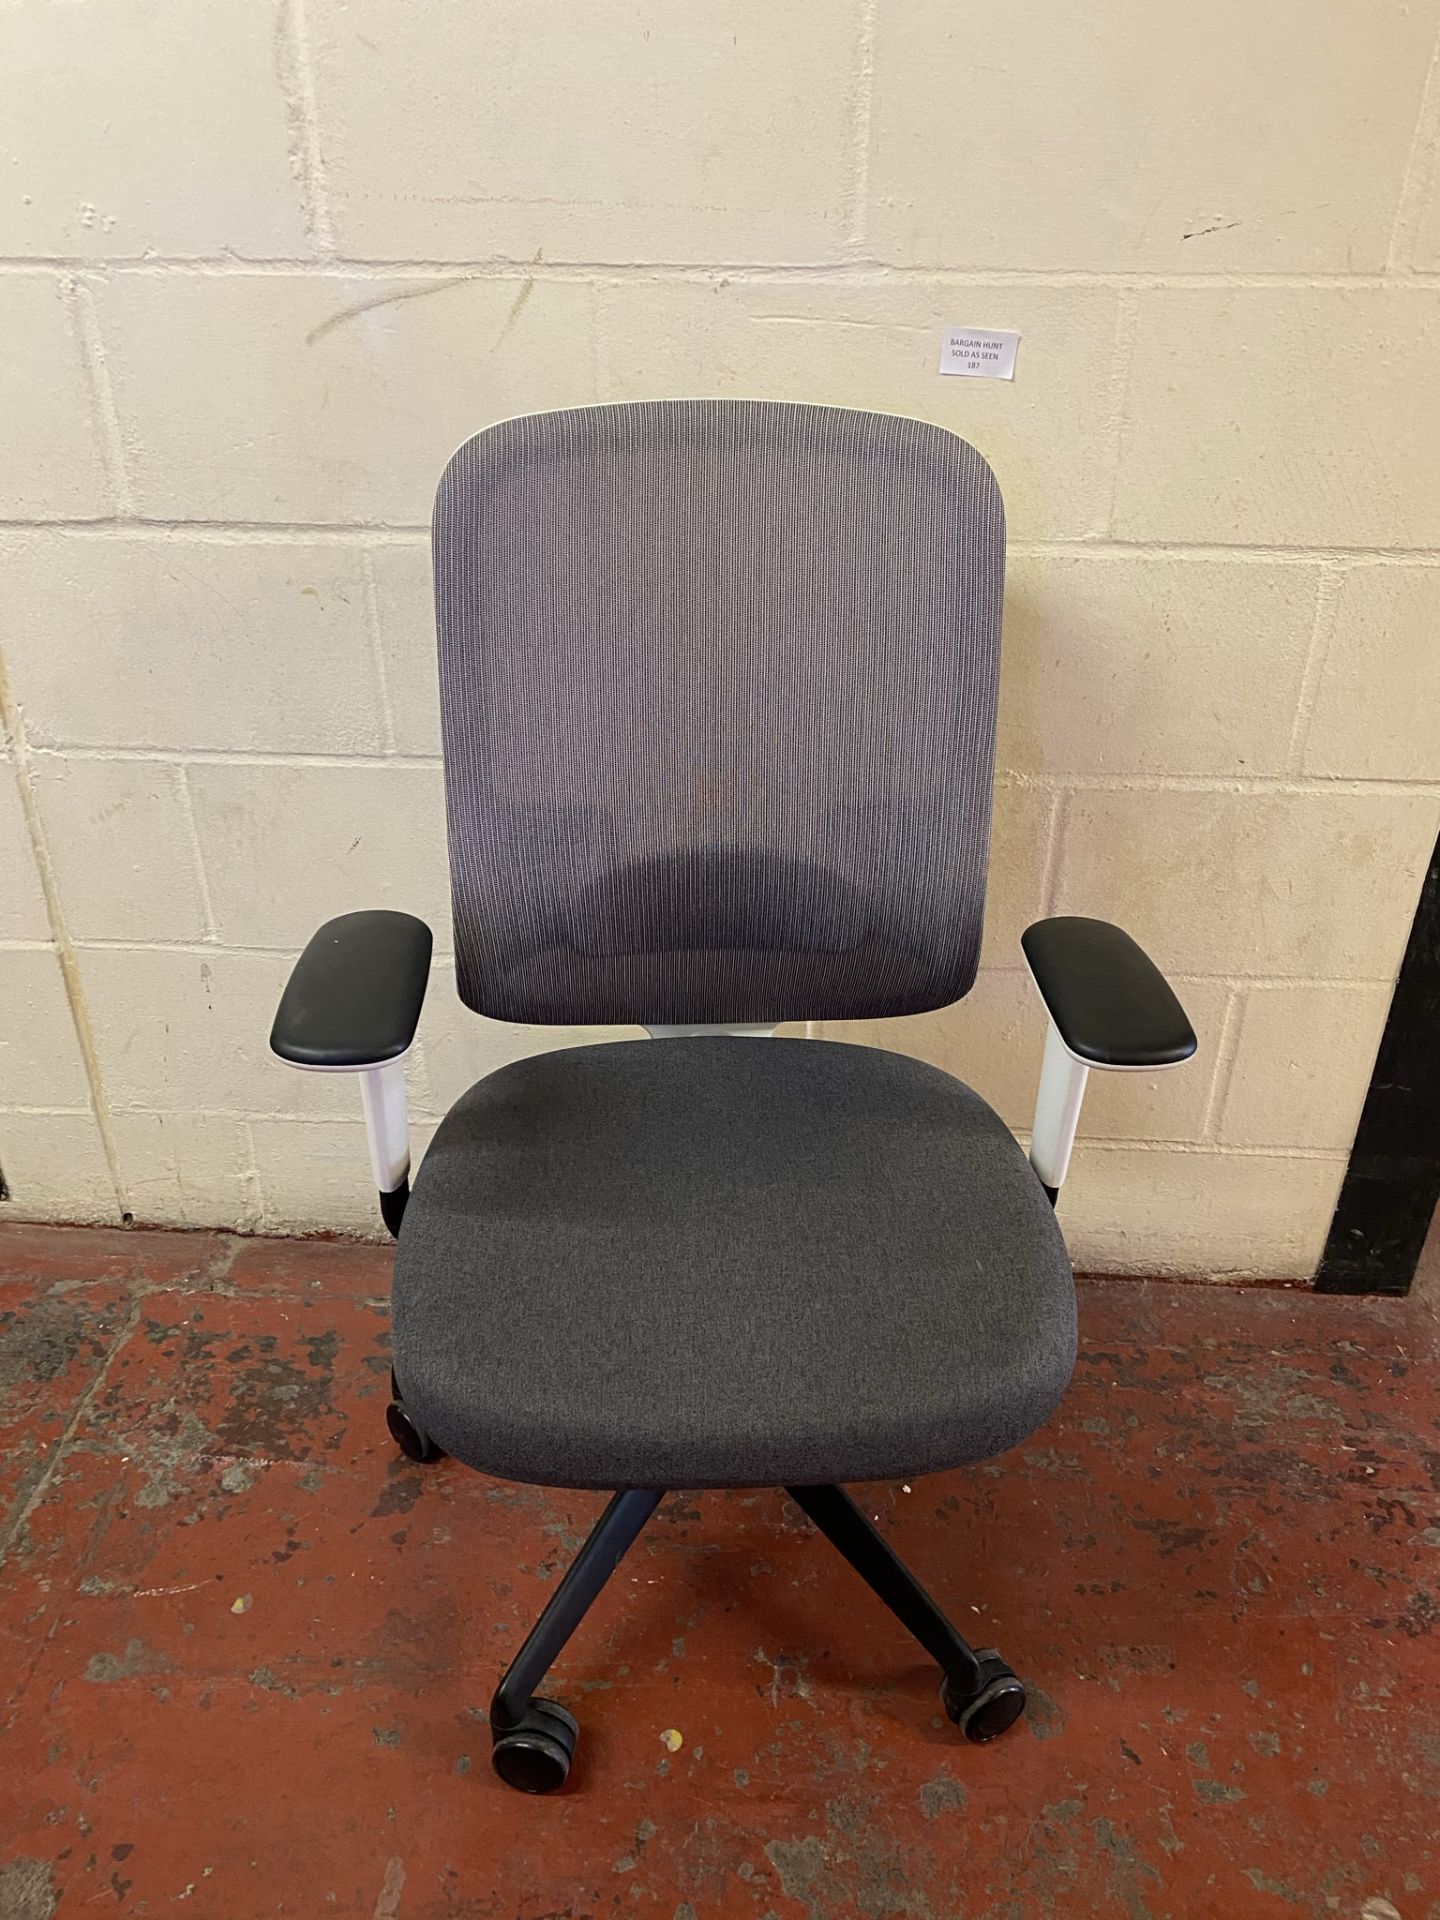 Orangebox Do-HBA Office Chair RRP £300